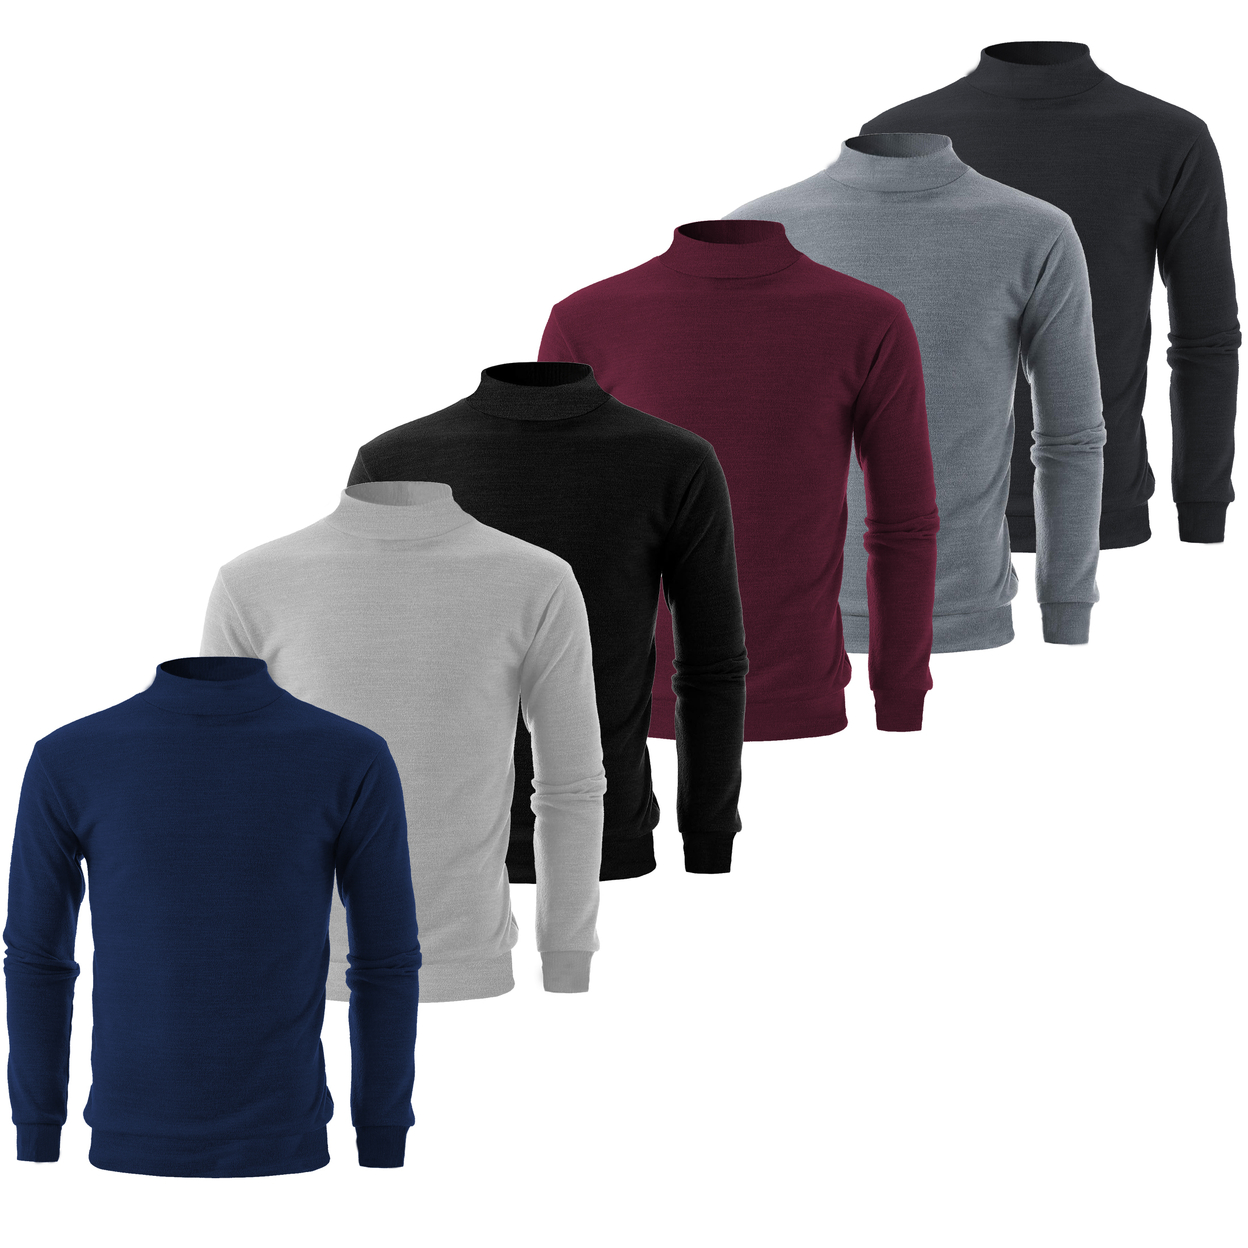 Men's Winter Warm Cozy Knit Slim-Fit Mock Neck Sweater - Black, Medium